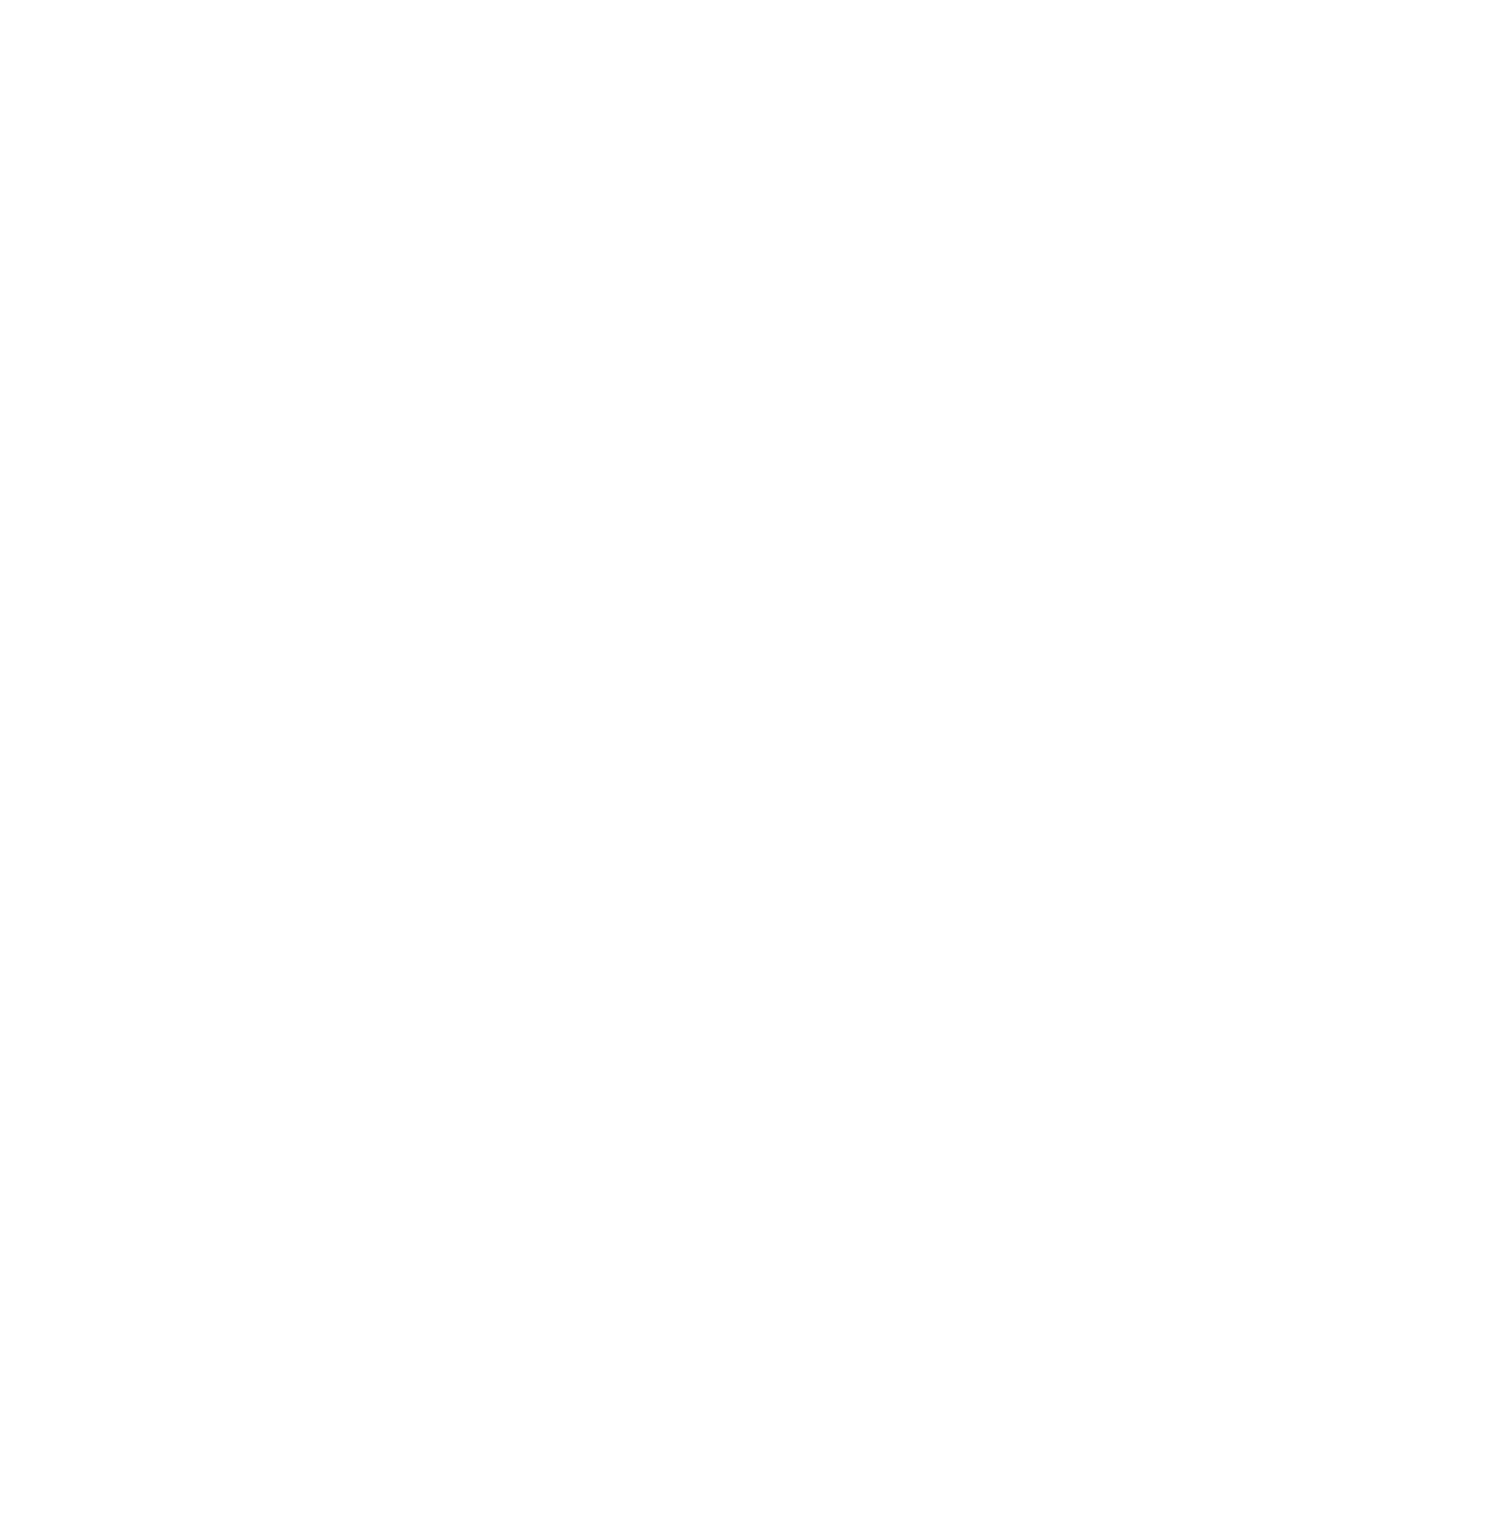 A2 Screen Printing